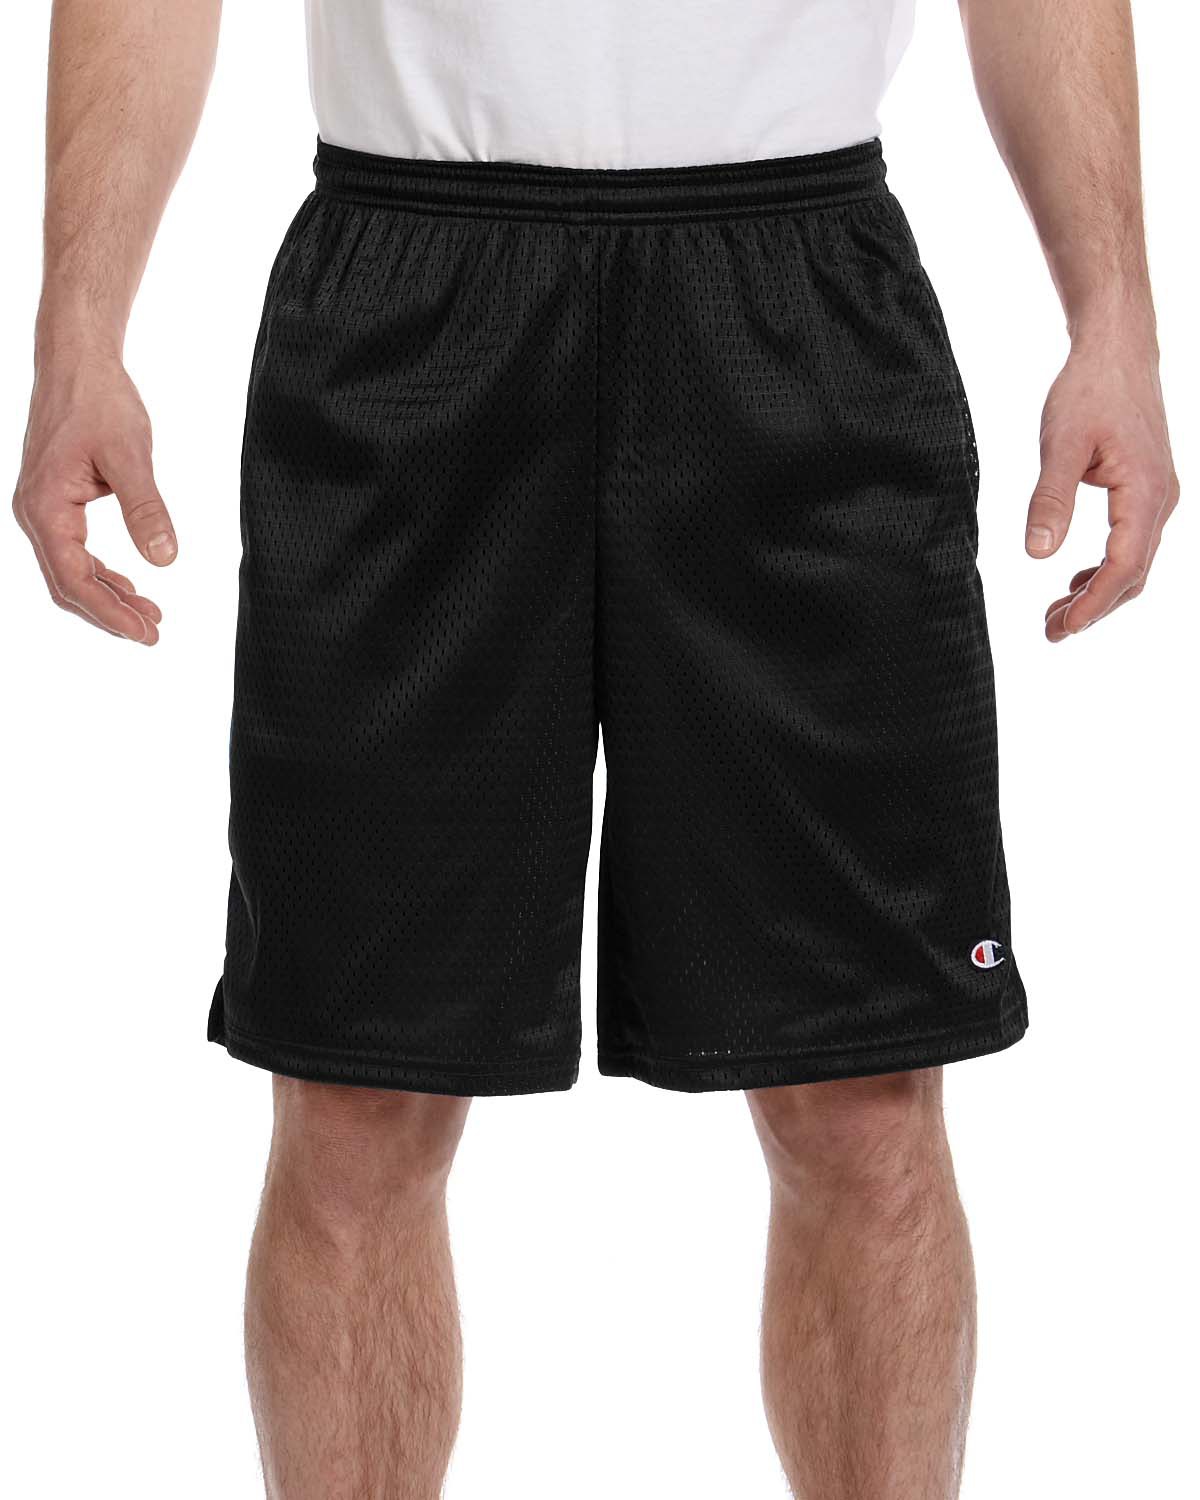 men's champion shorts with pockets